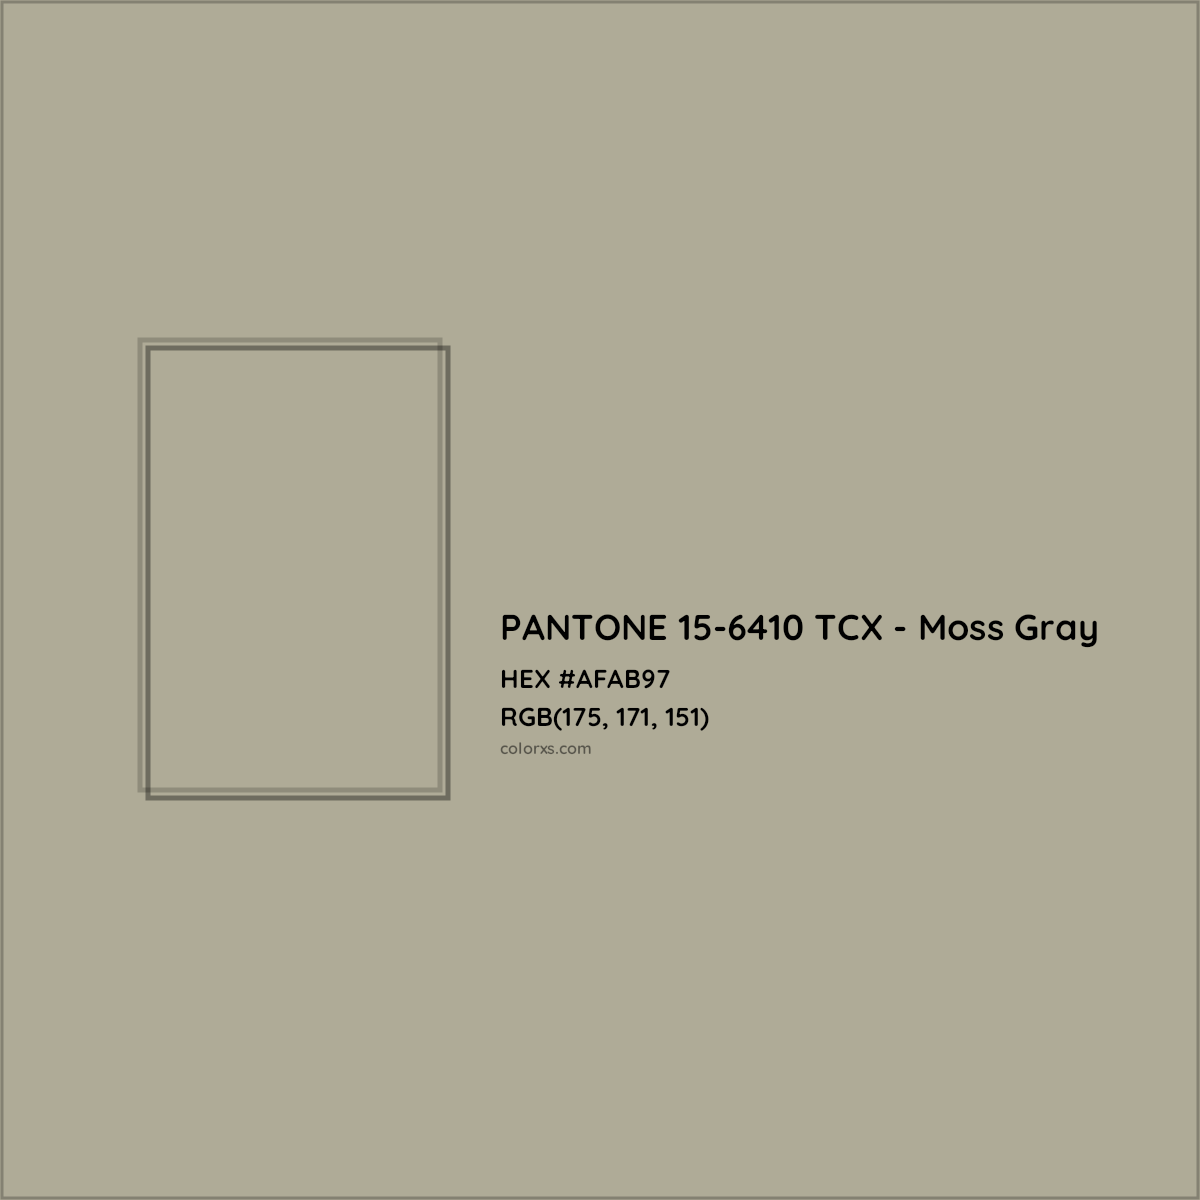 HEX #AFAB97 PANTONE 15-6410 TCX - Moss Gray CMS Pantone TCX - Color Code